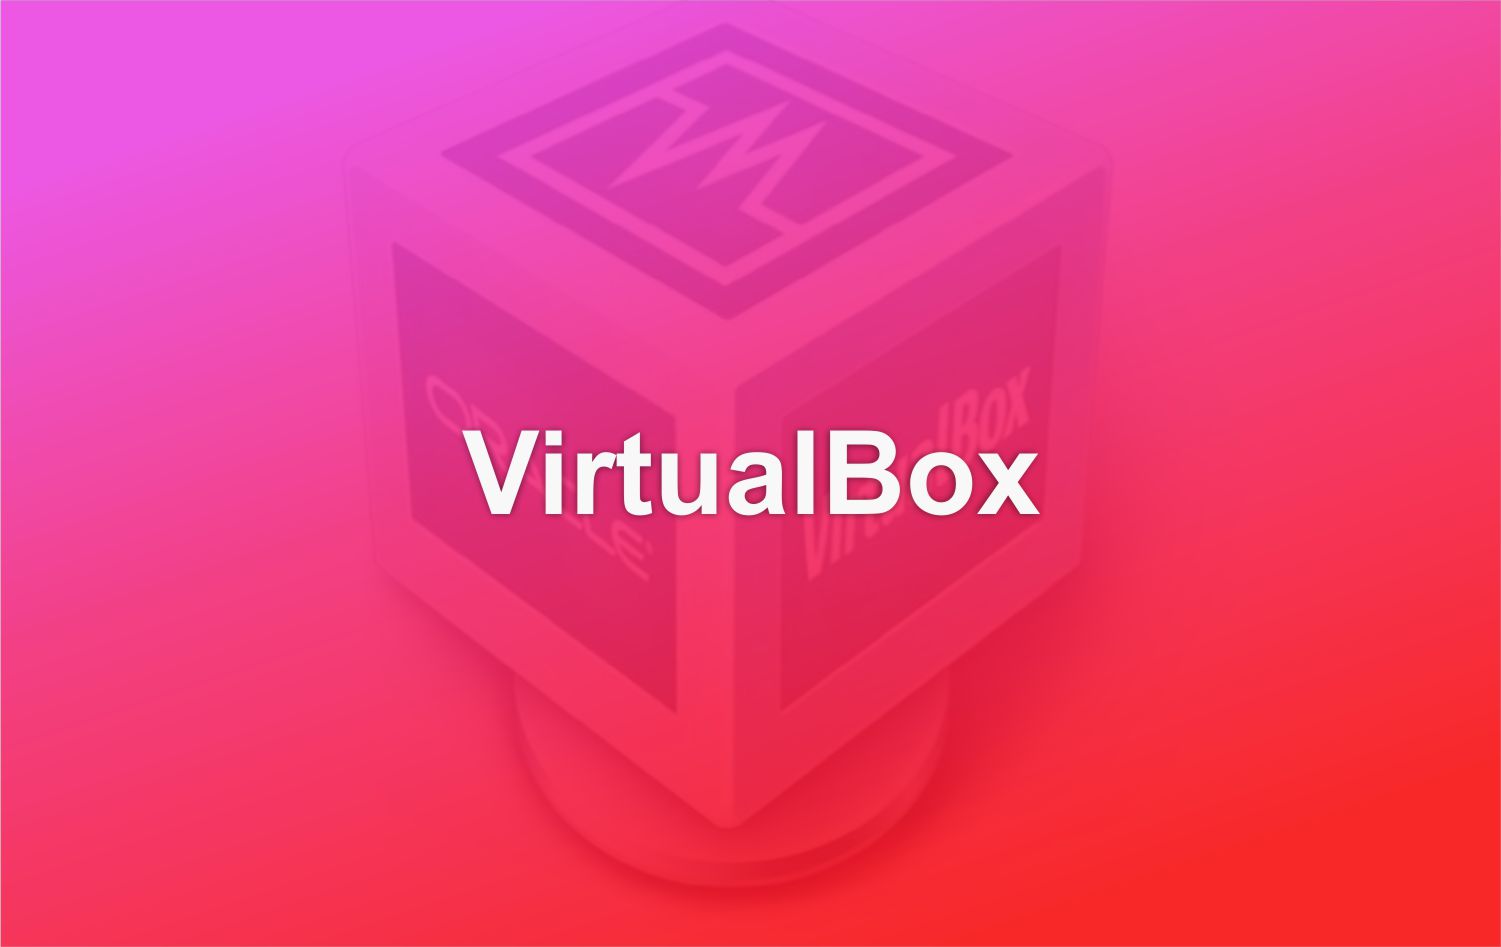 How to Install VirtualBox on Ubuntu 18.04